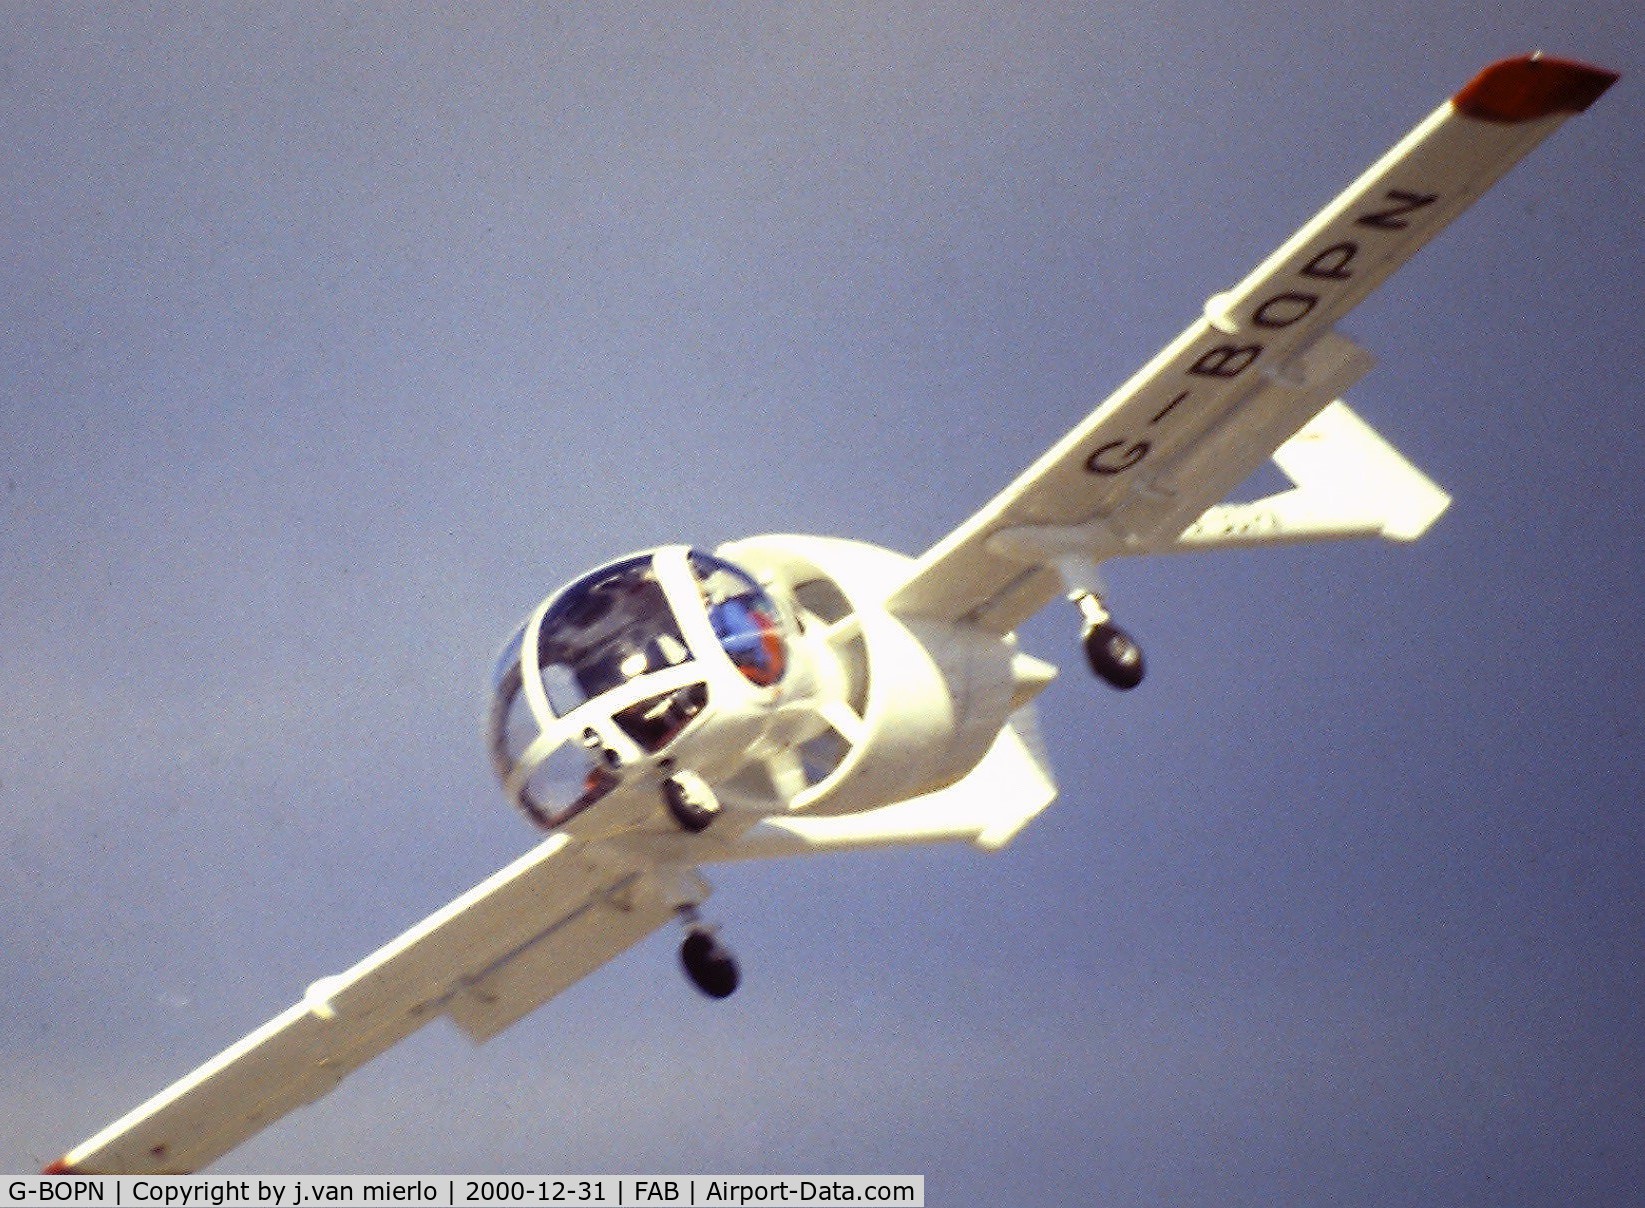 G-BOPN, 1990 Brooklands Aerospace Optica Srs 301 C/N 020, scan fromslide